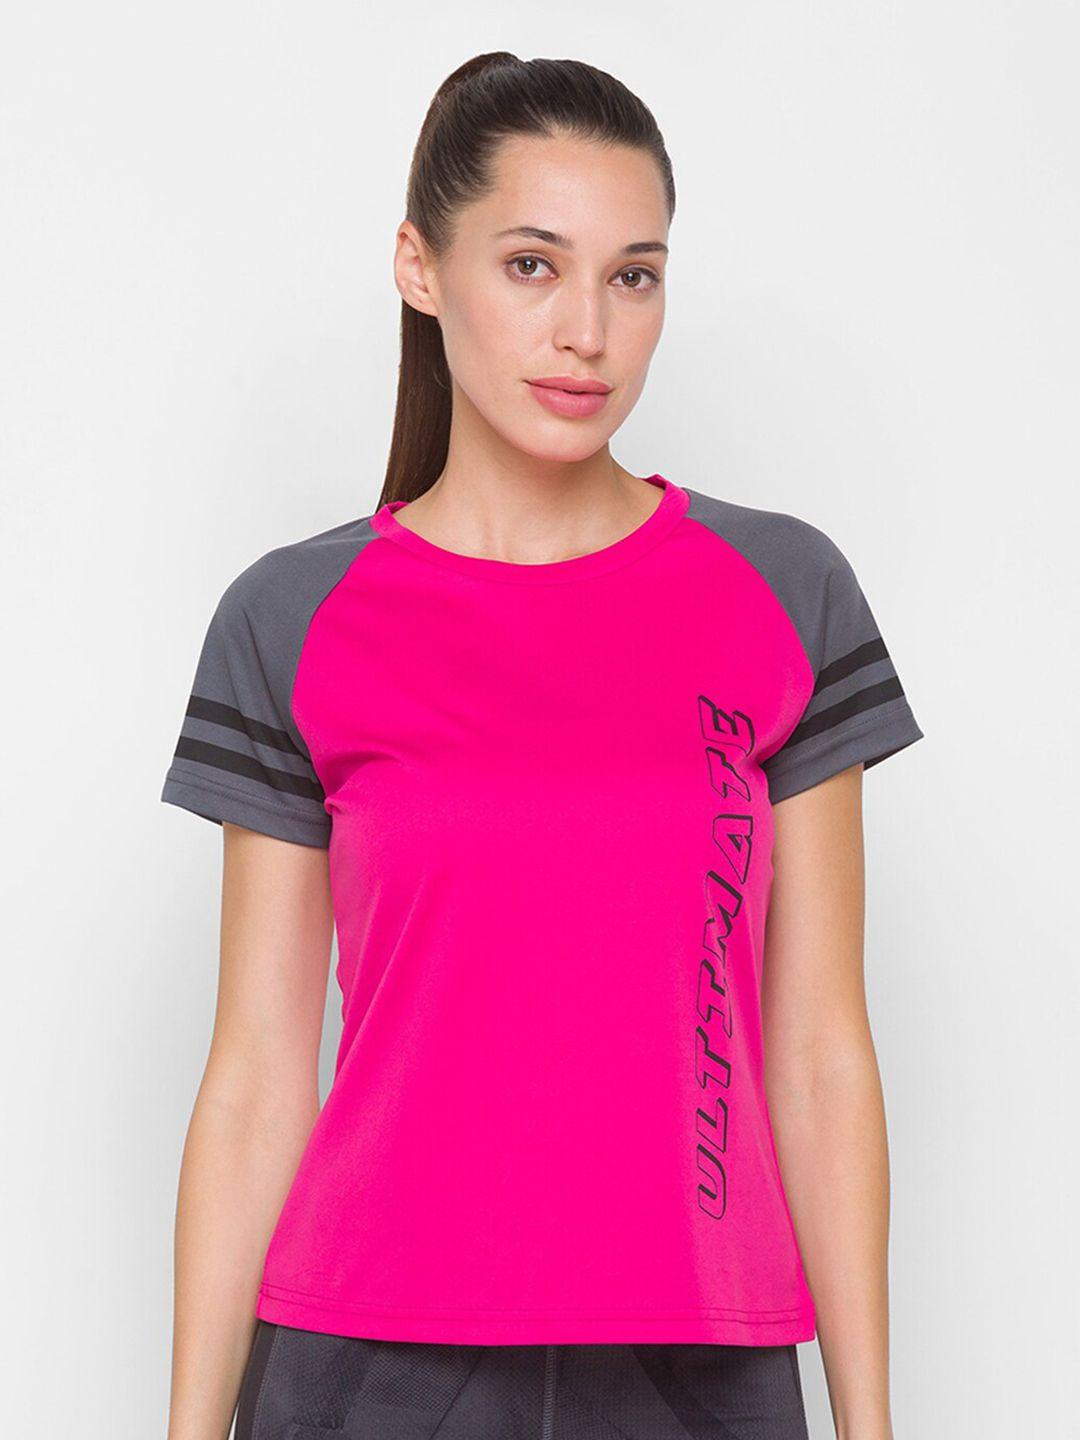 globus women fuchsia & grey colourblocked running t-shirt